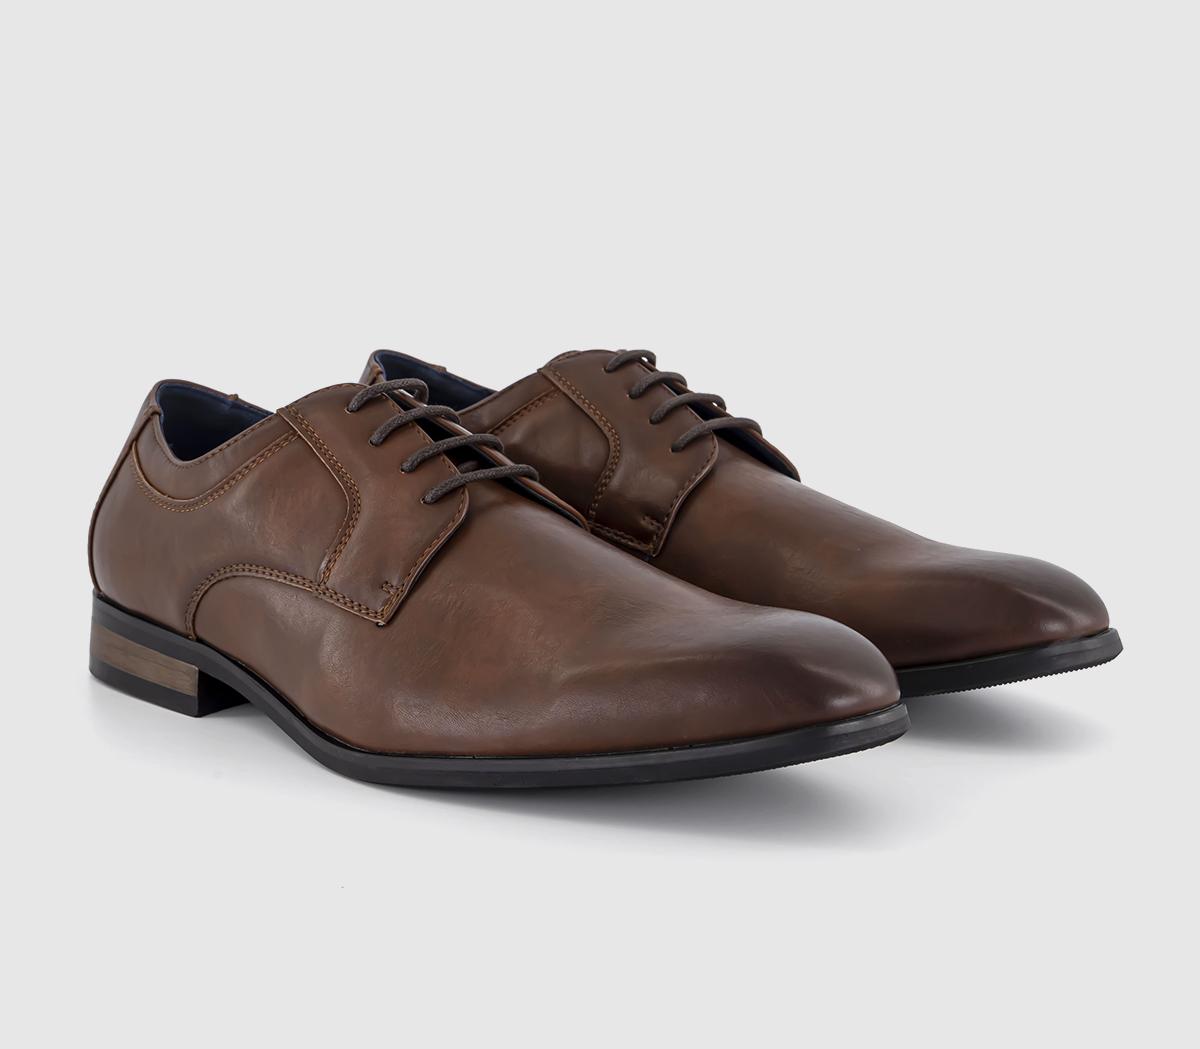 OFFICE Mens Modena Plain Toe Derby Shoes Brown, 8